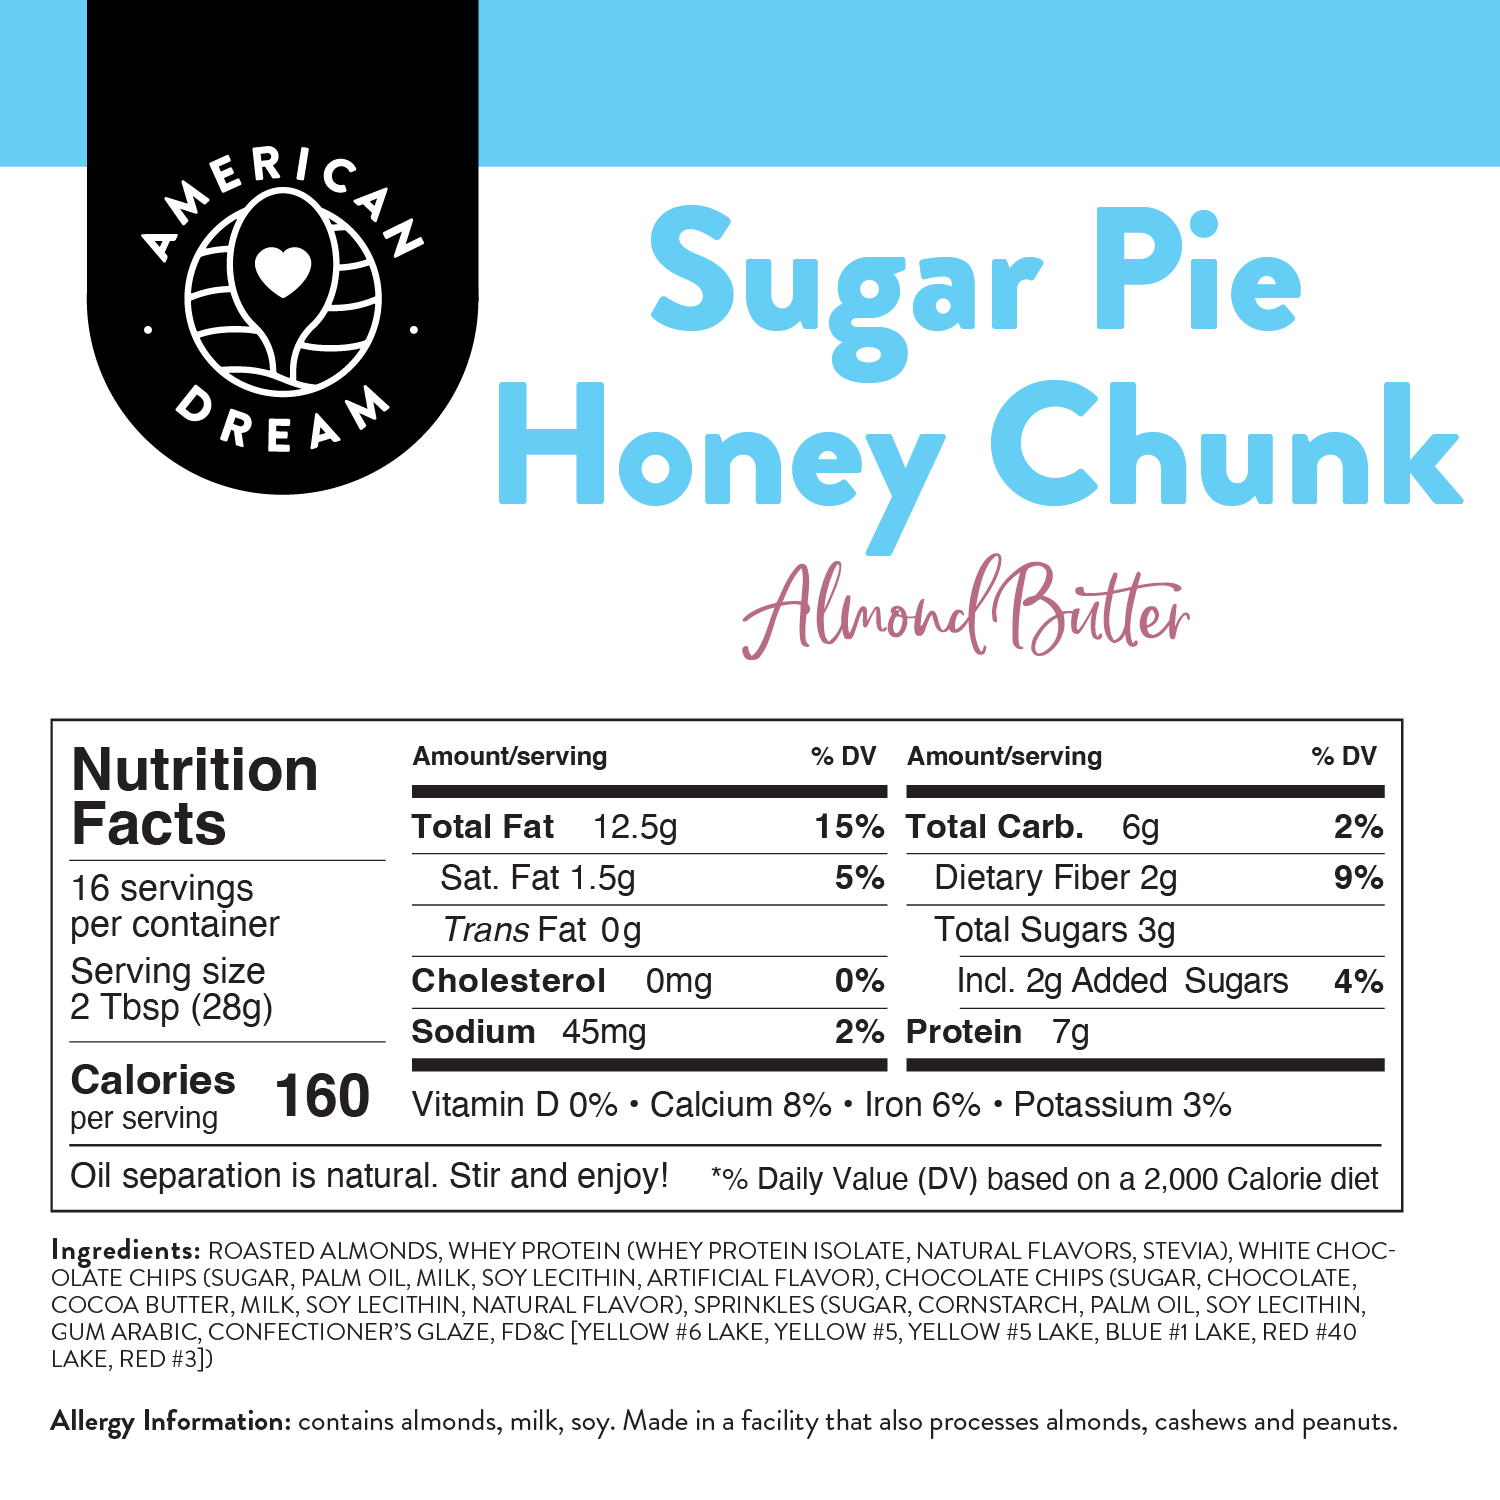 Gluten-Free Sugar Pie Honey Chunk Almond Butter